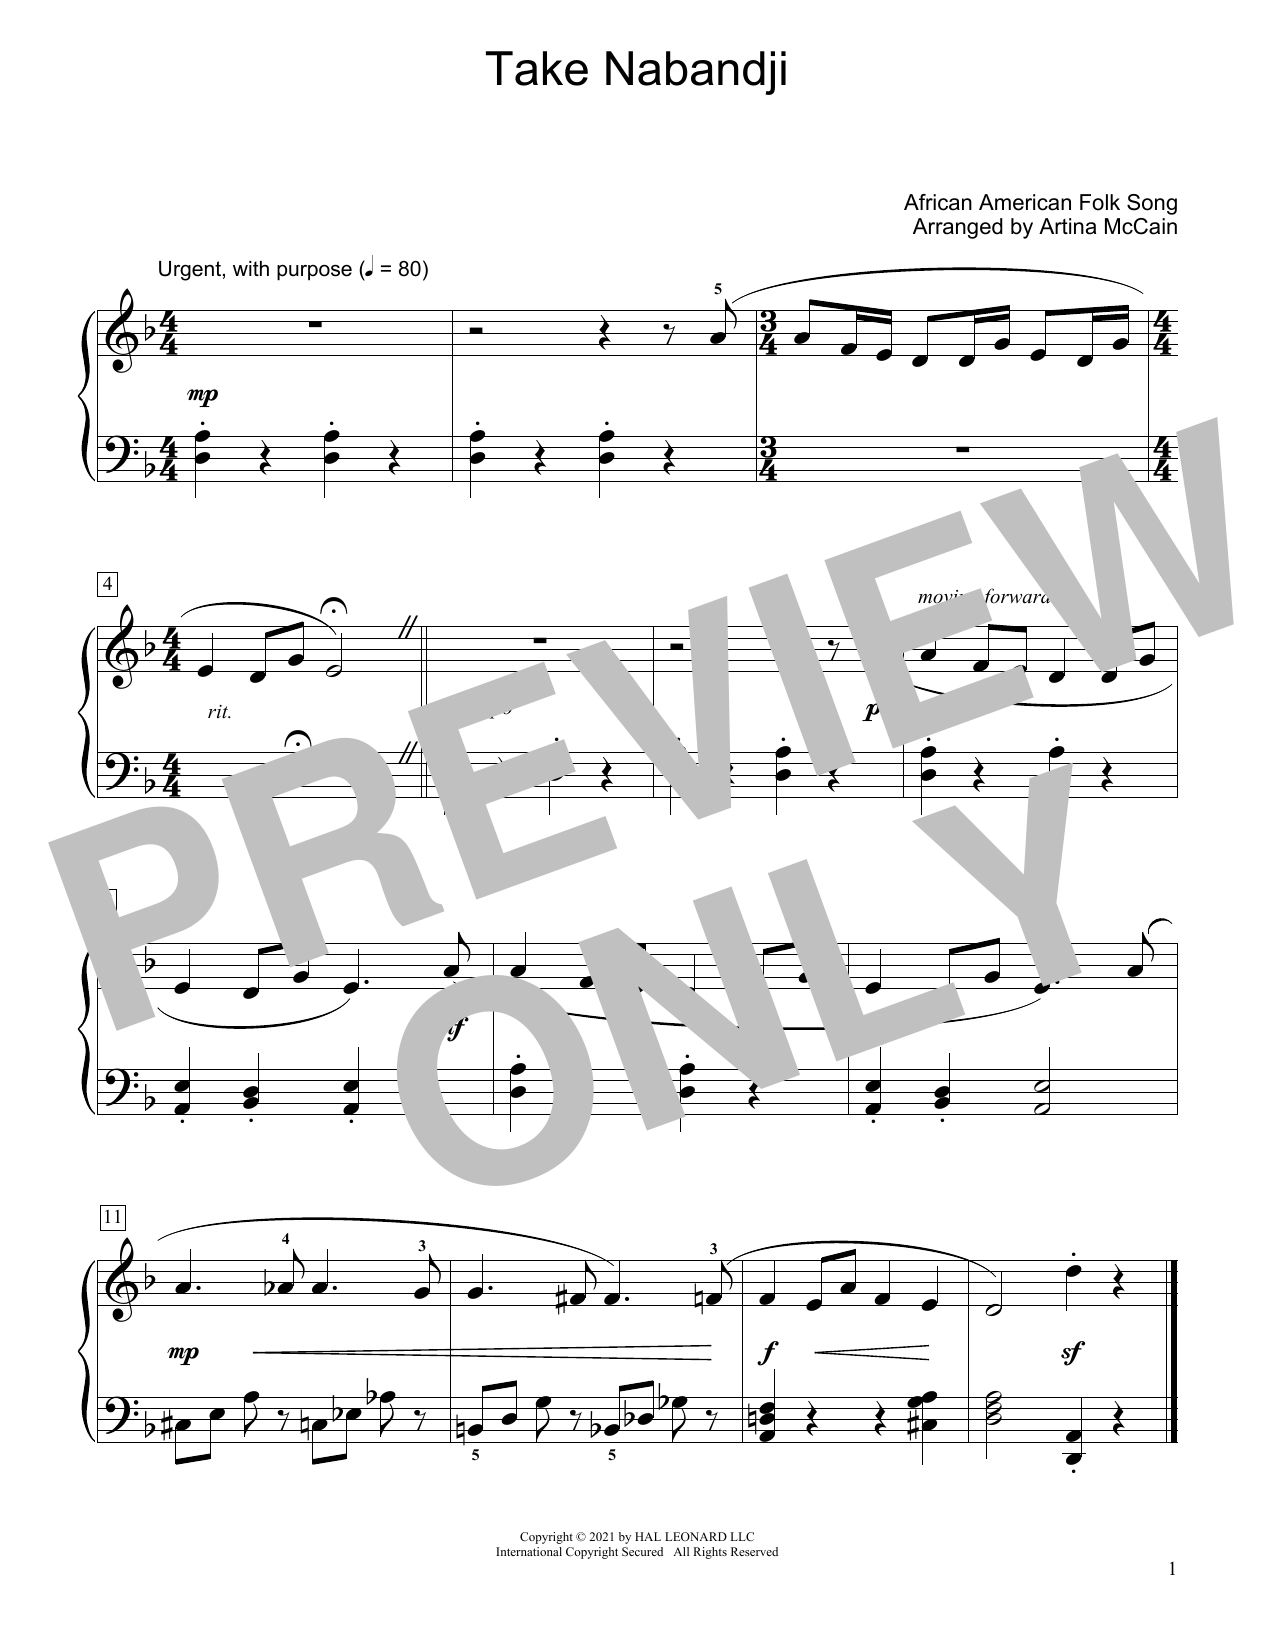 African American Folk Song Take Nabandji (arr. Artina McCain) Sheet Music Notes & Chords for Educational Piano - Download or Print PDF